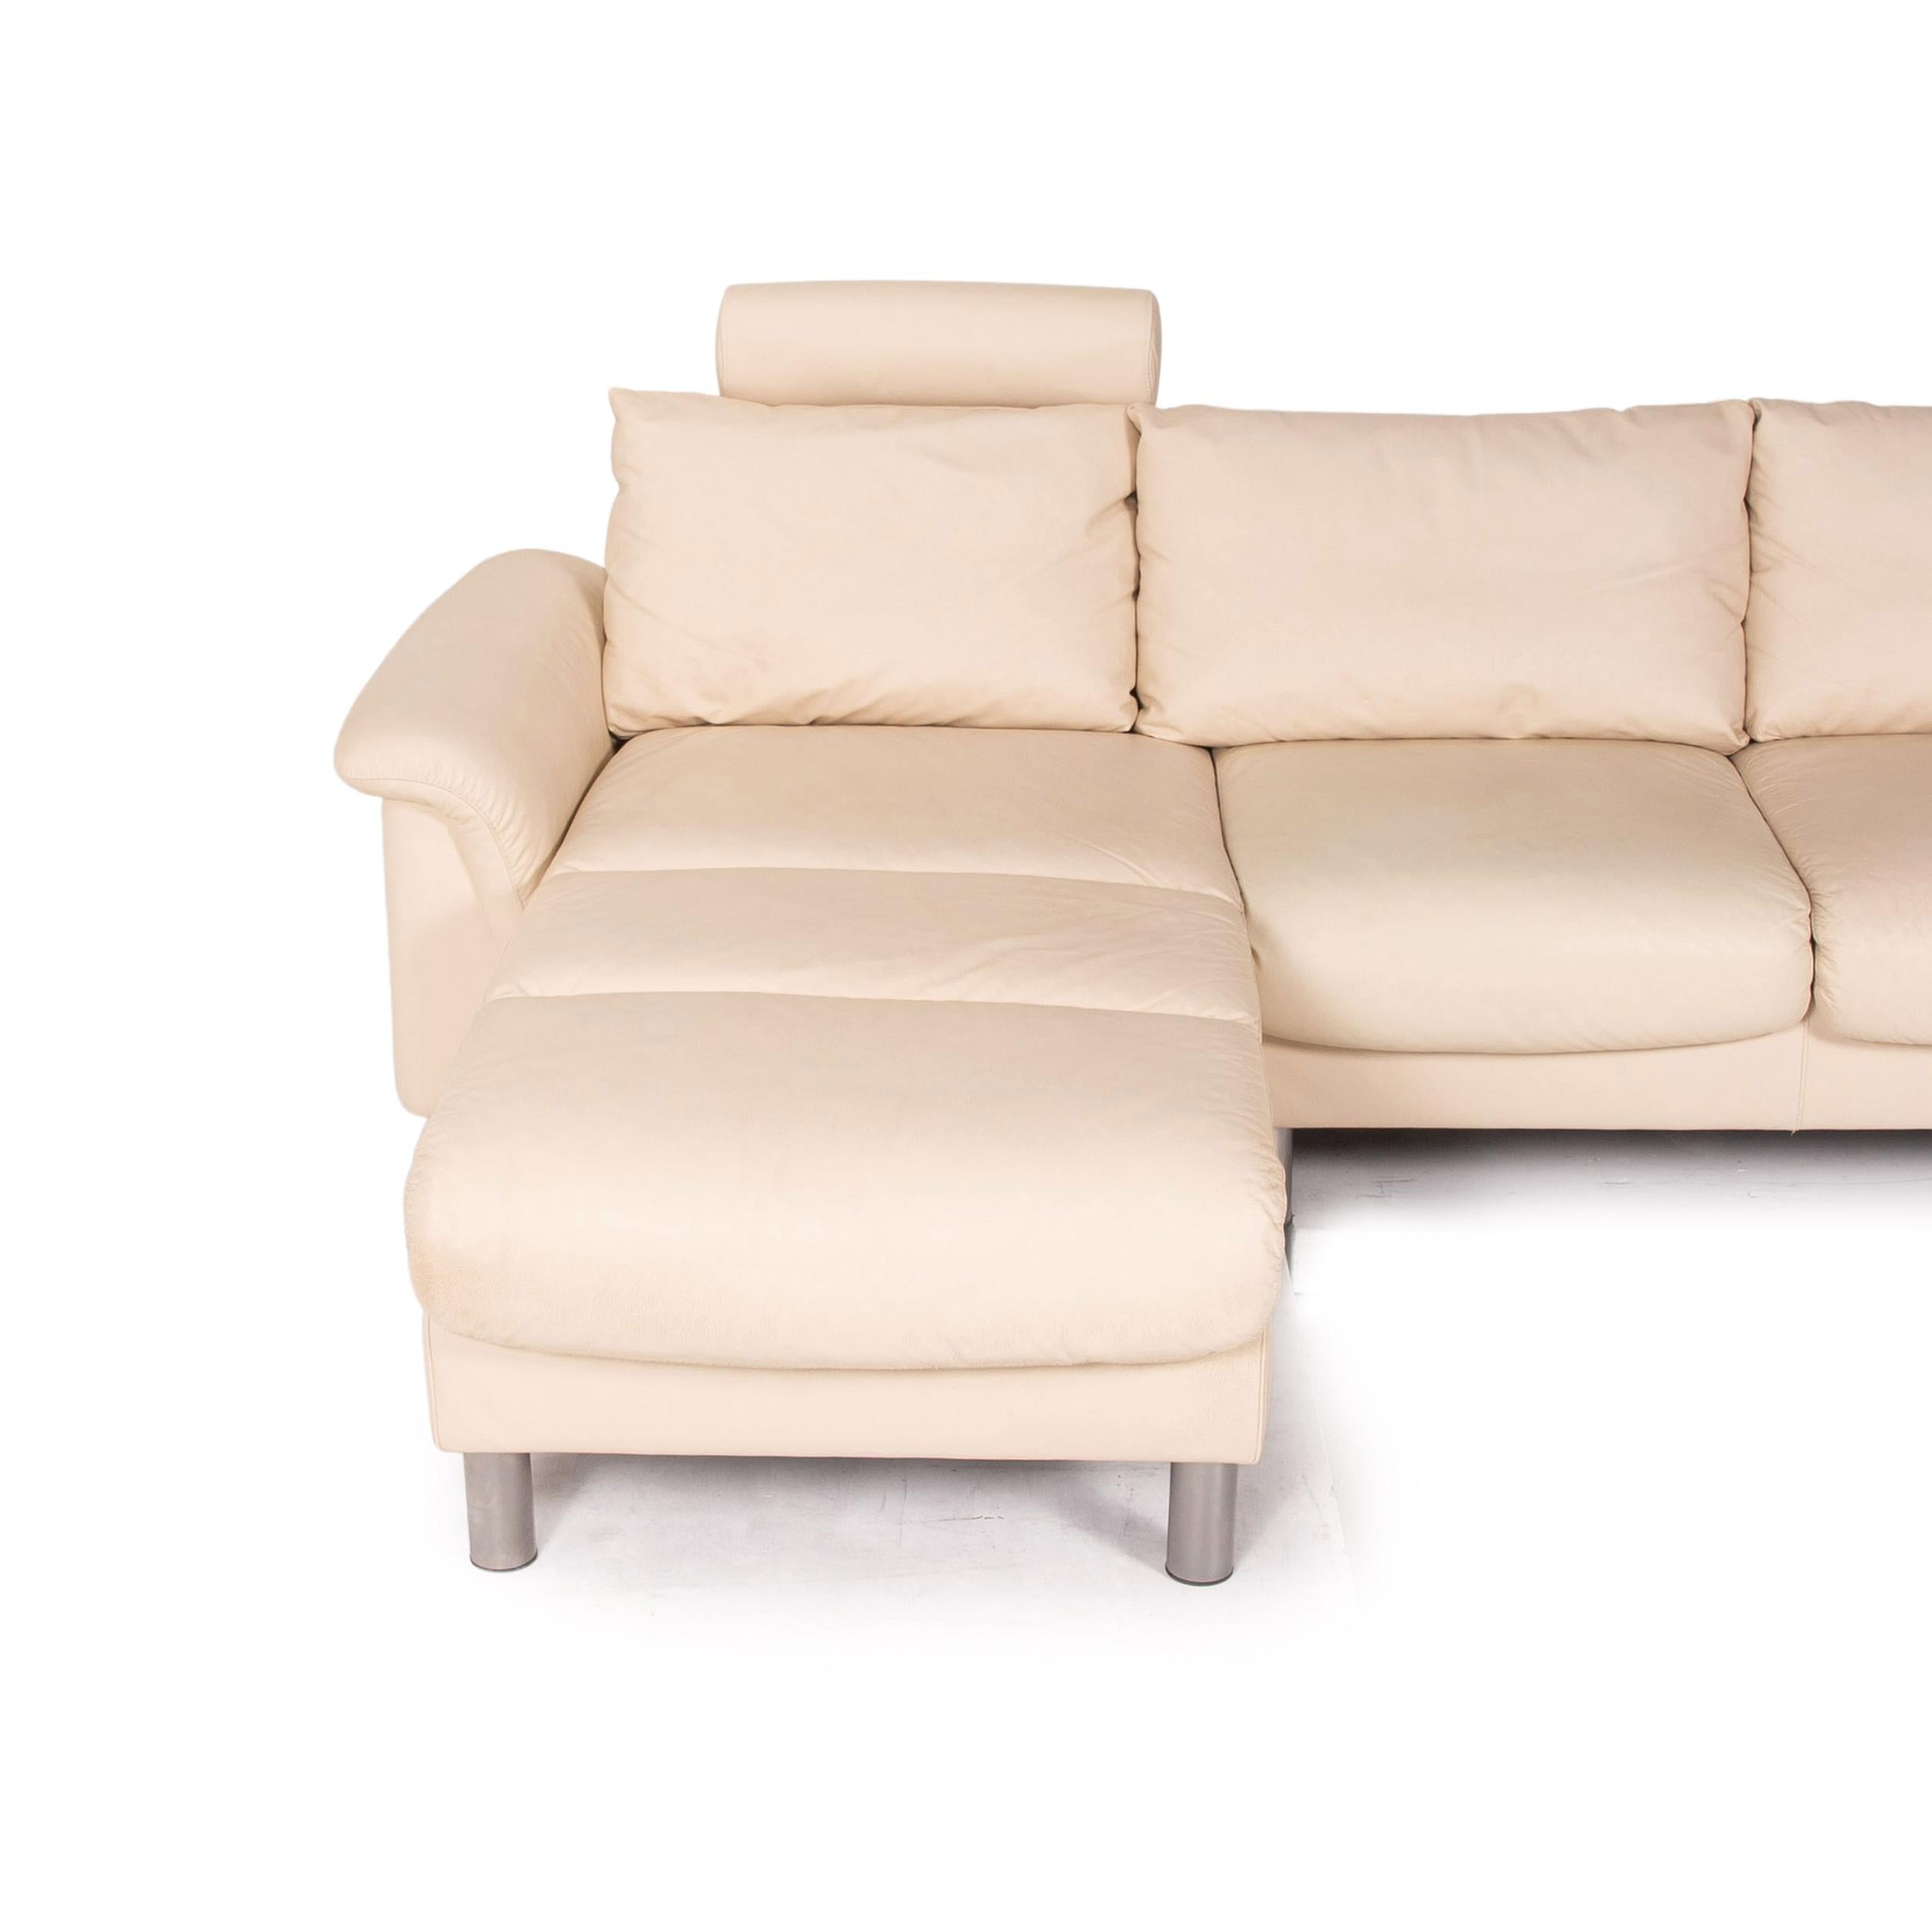 Stressless E300 Leather Corner Sofa Cream Sofa Function Couch 1